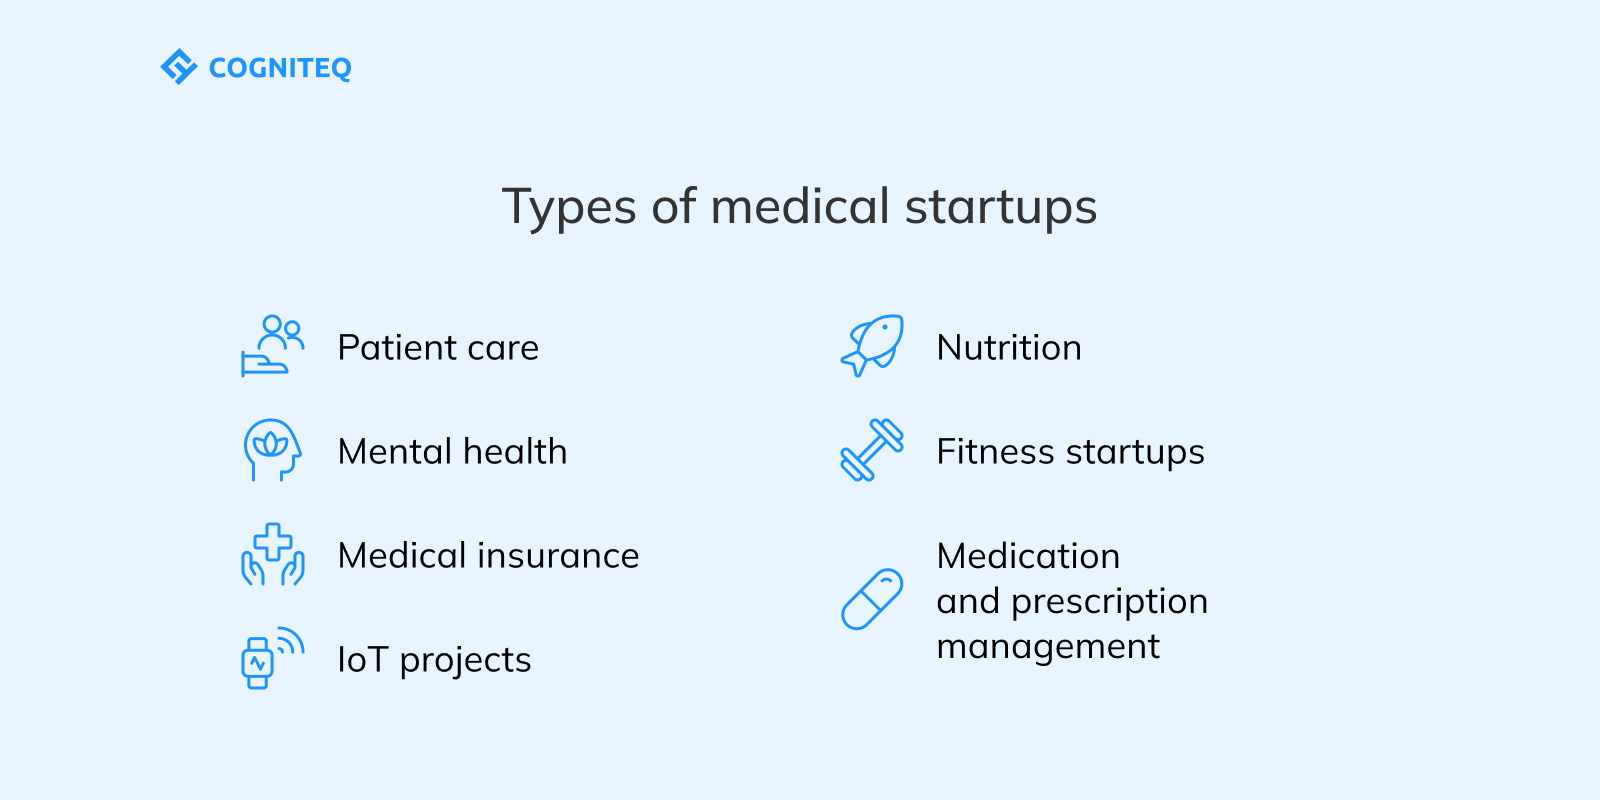 Types of medical startups